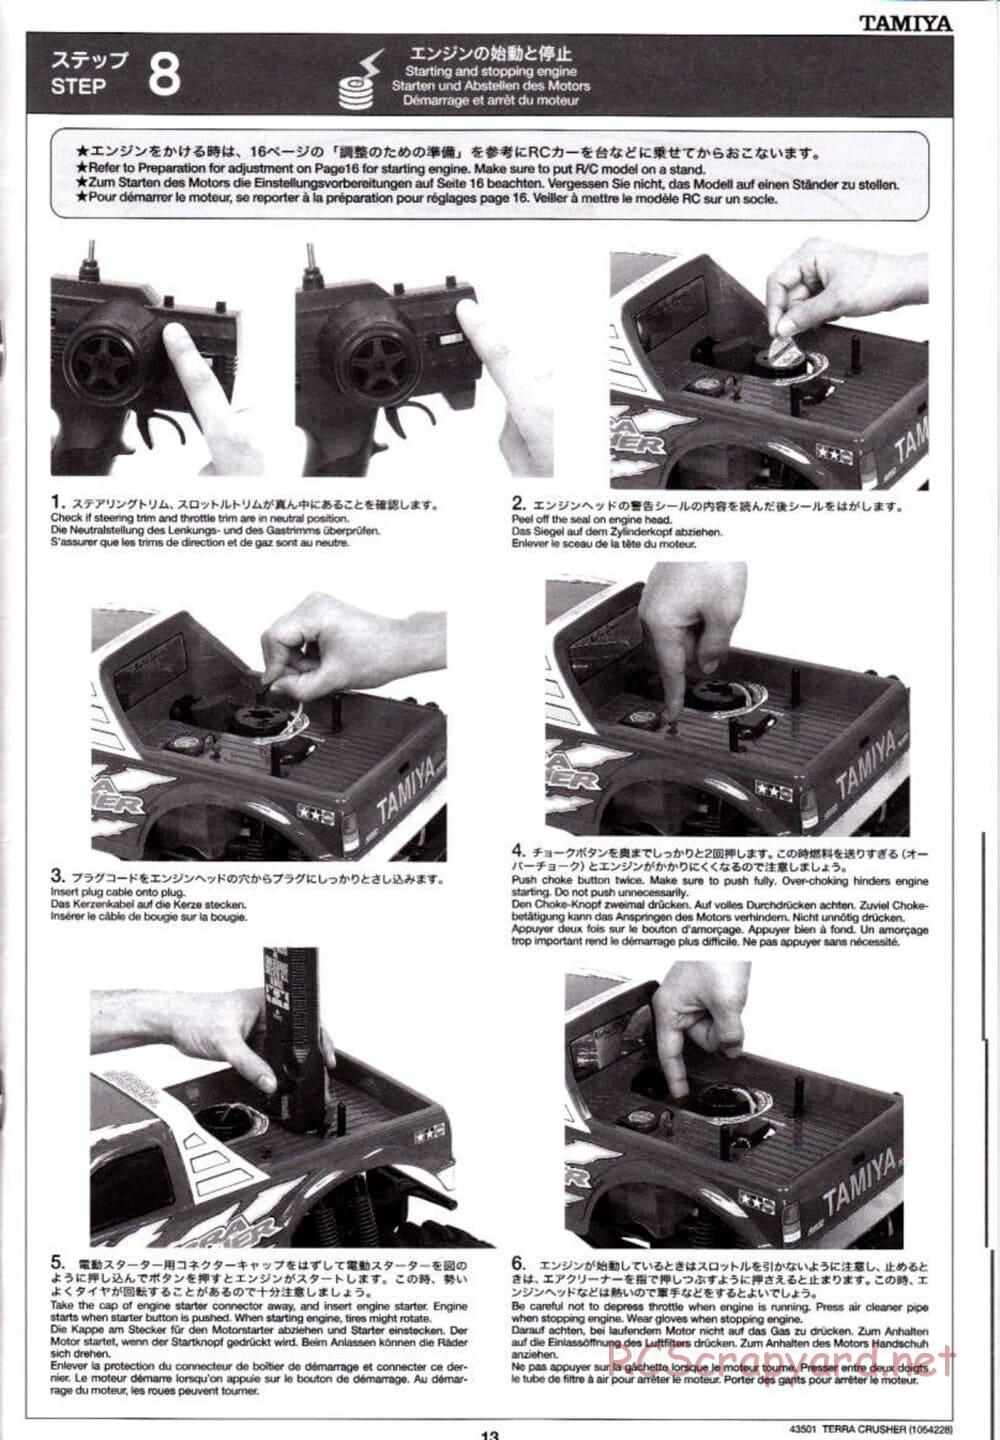 Tamiya - Terra Crusher - TGM-02 Chassis - Manual - Page 13